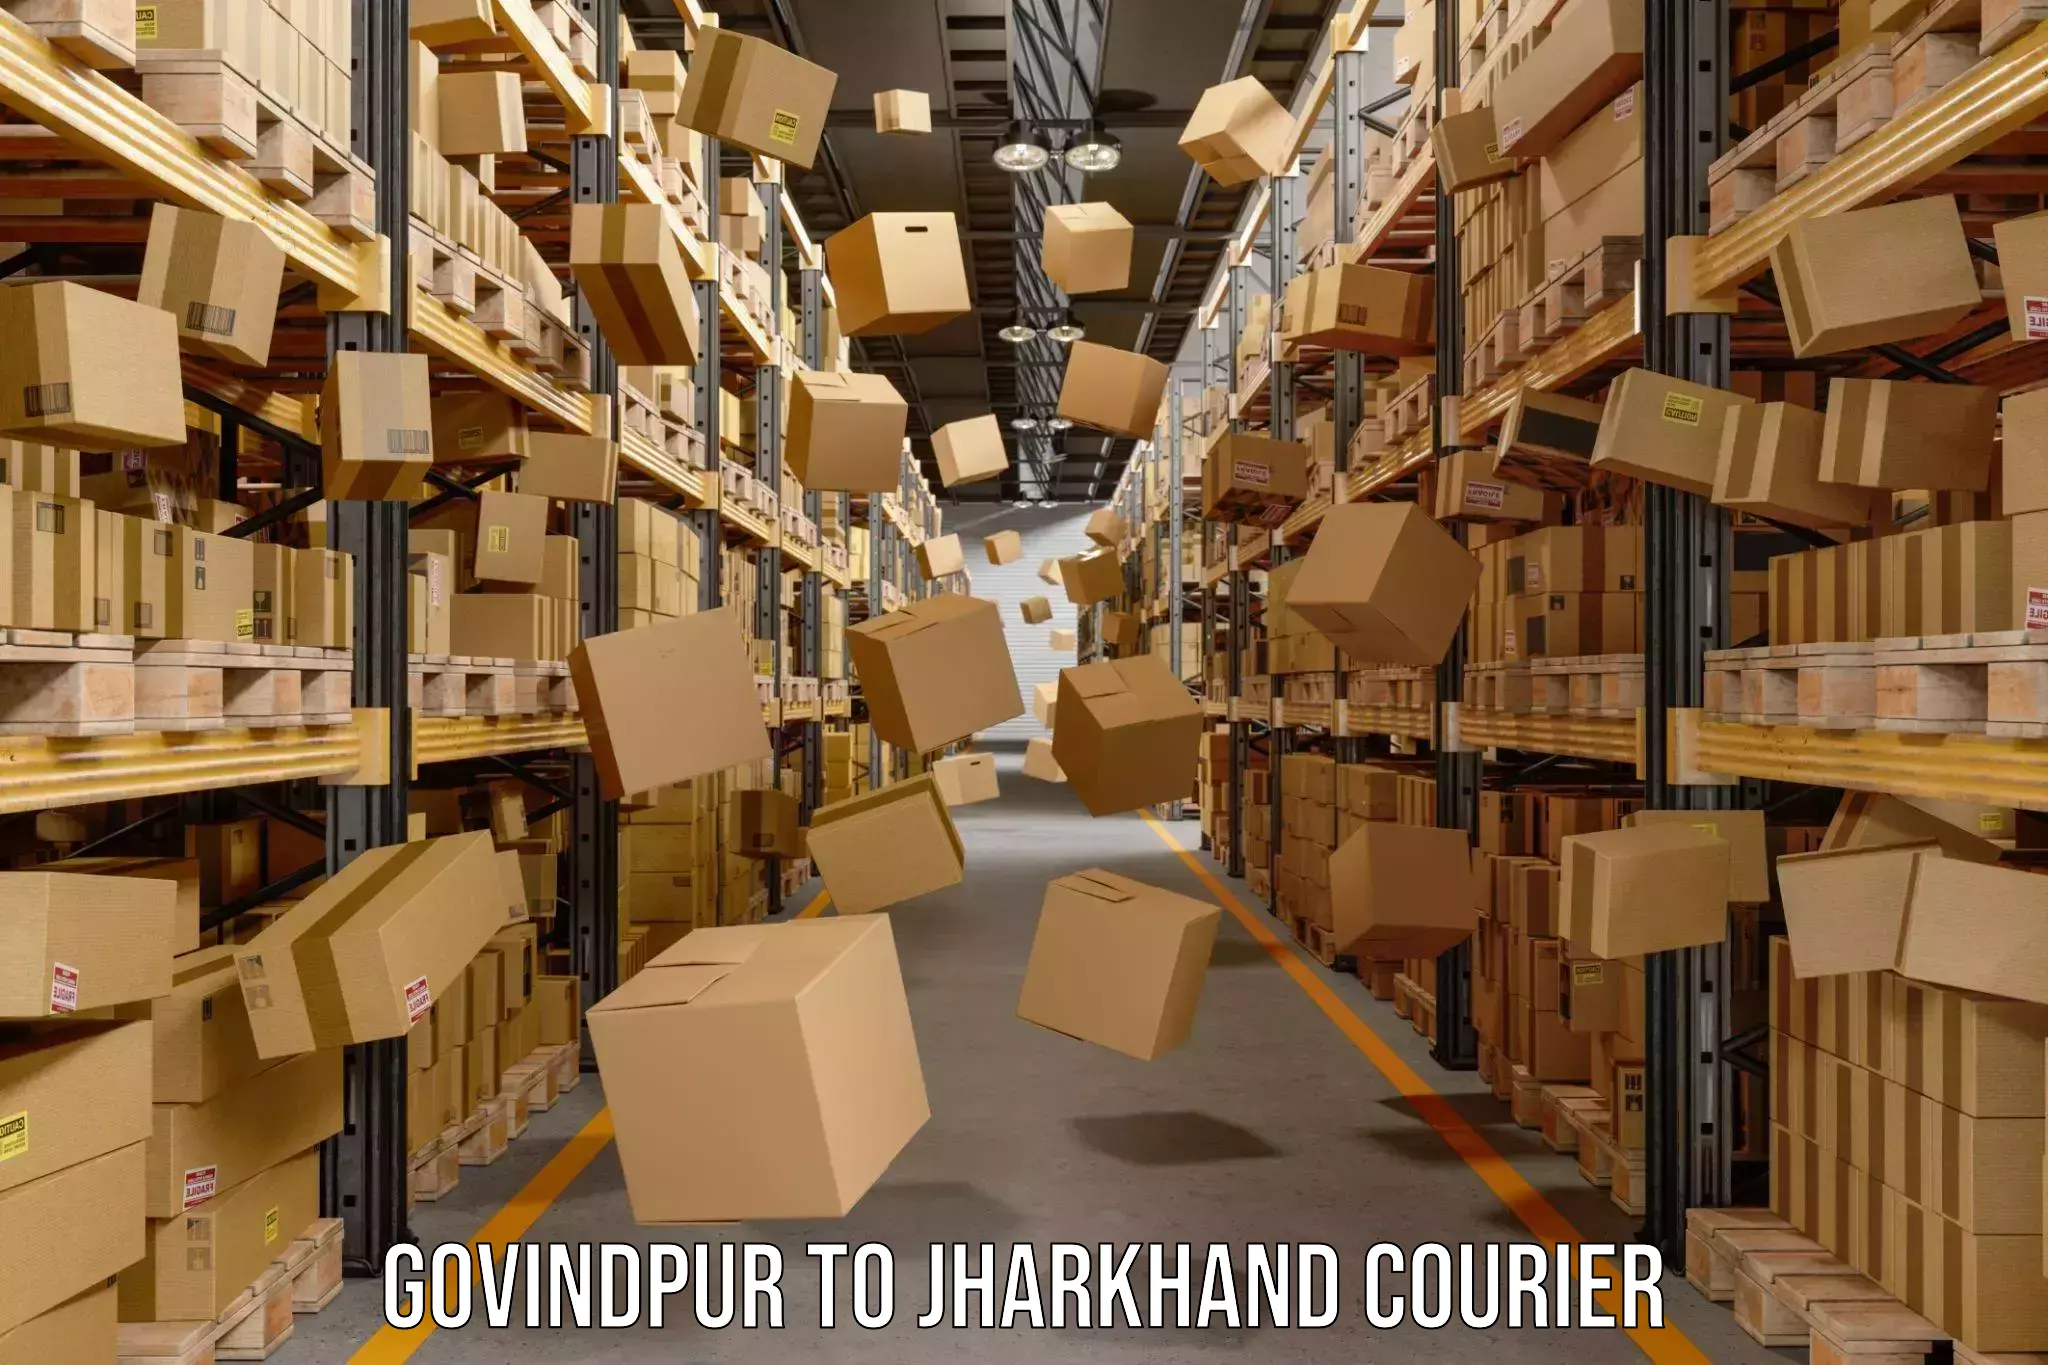 Courier service innovation Govindpur to Peterbar